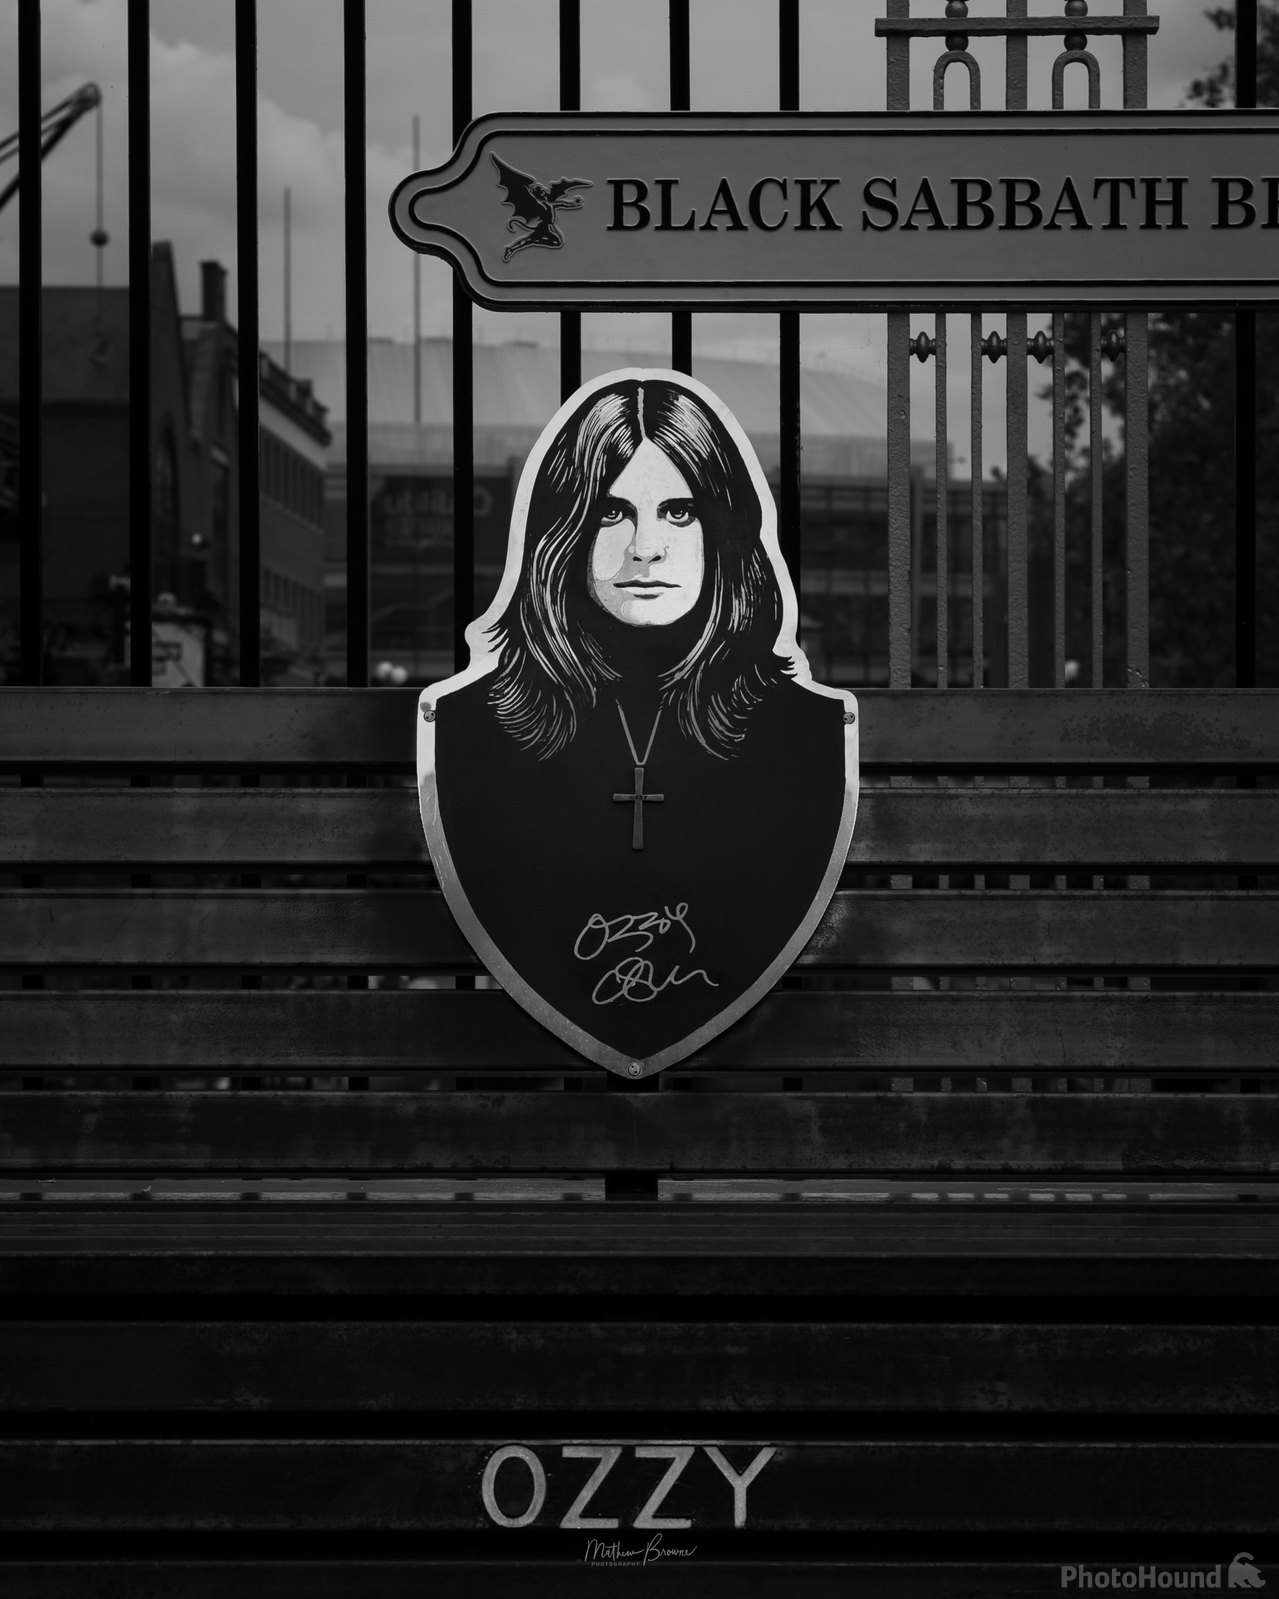 Image of Black Sabbath Bridge by Mathew Browne